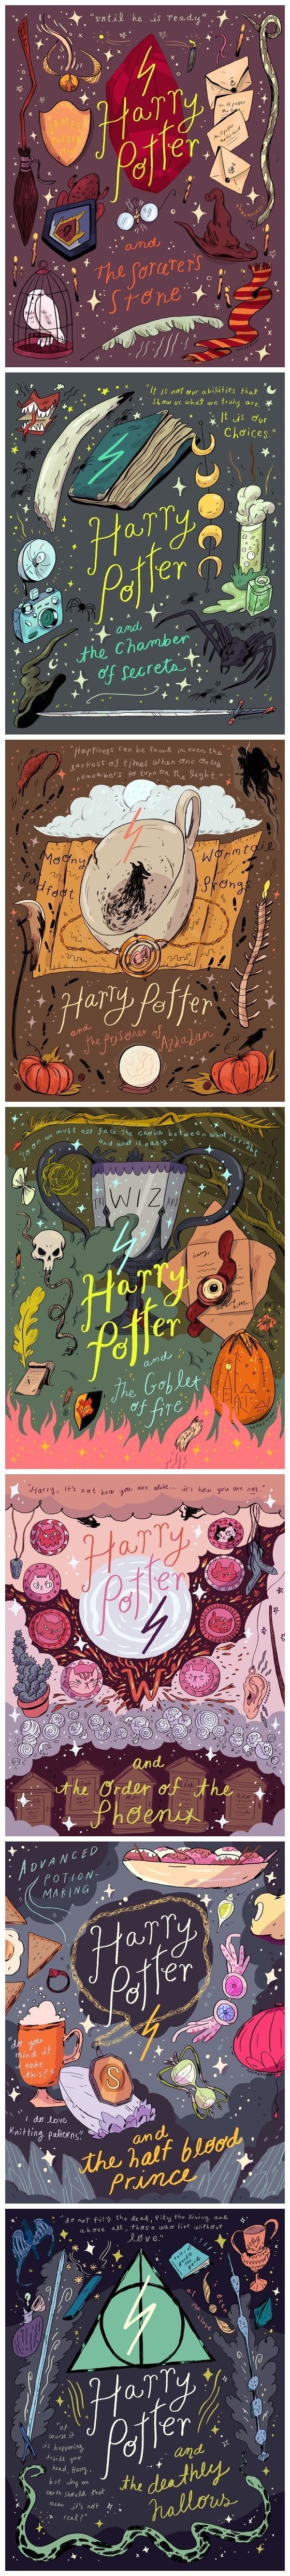 Harry Potter print Illustration from natalie-andrewson…